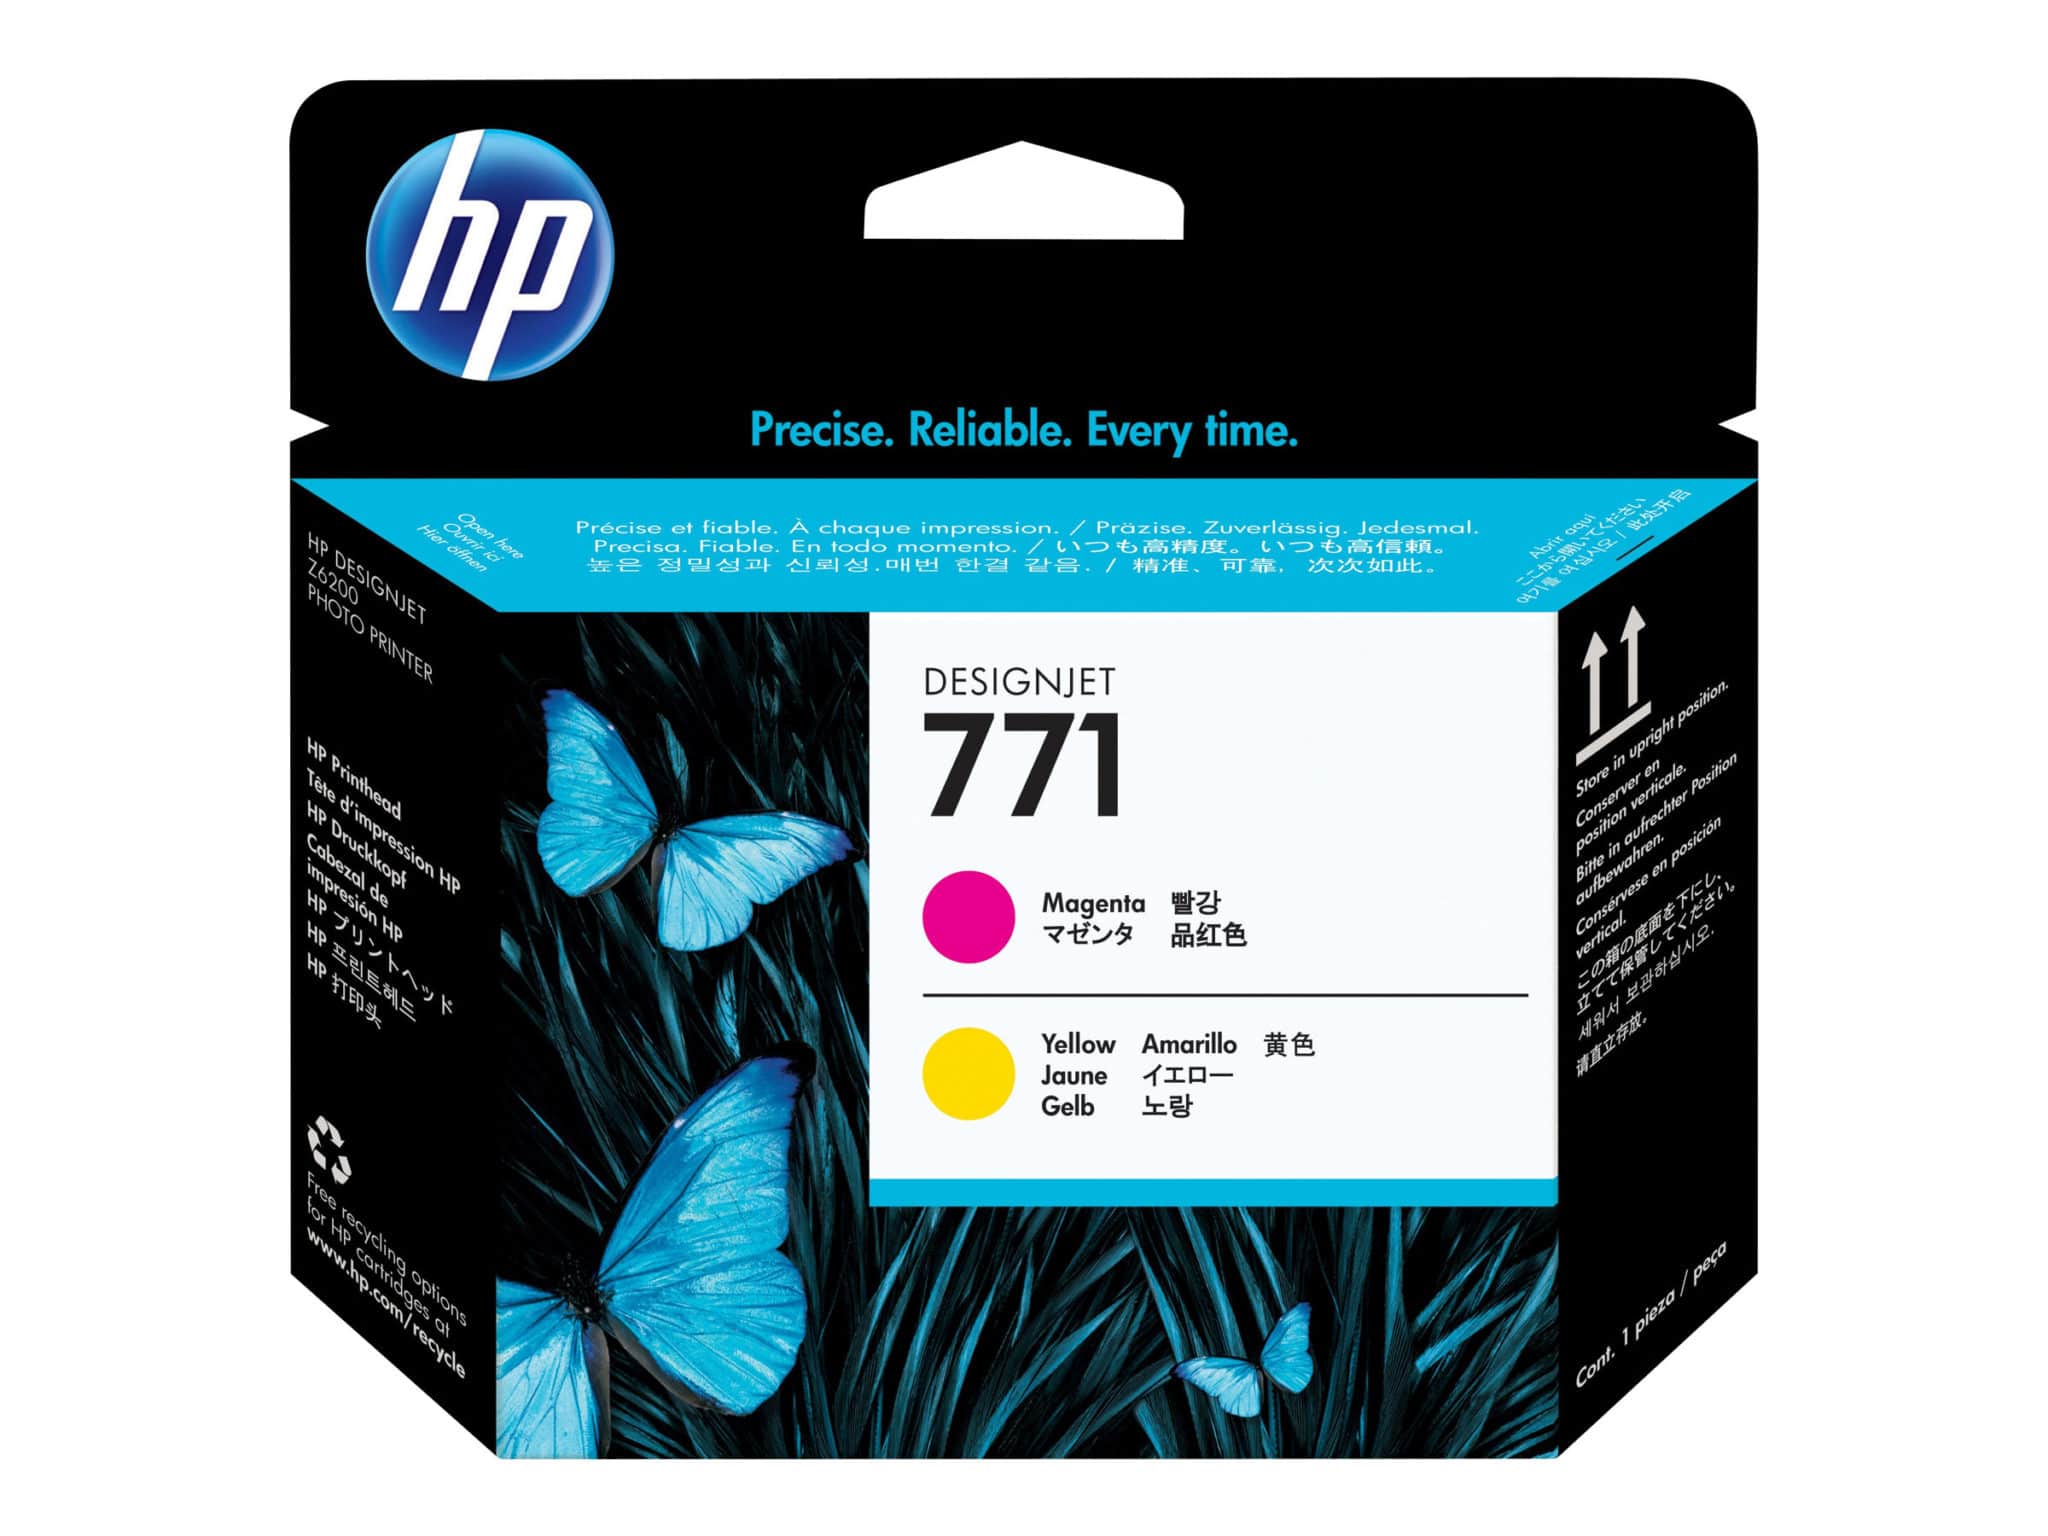 HP 771 Magenta and Yellow Designjet Printhead